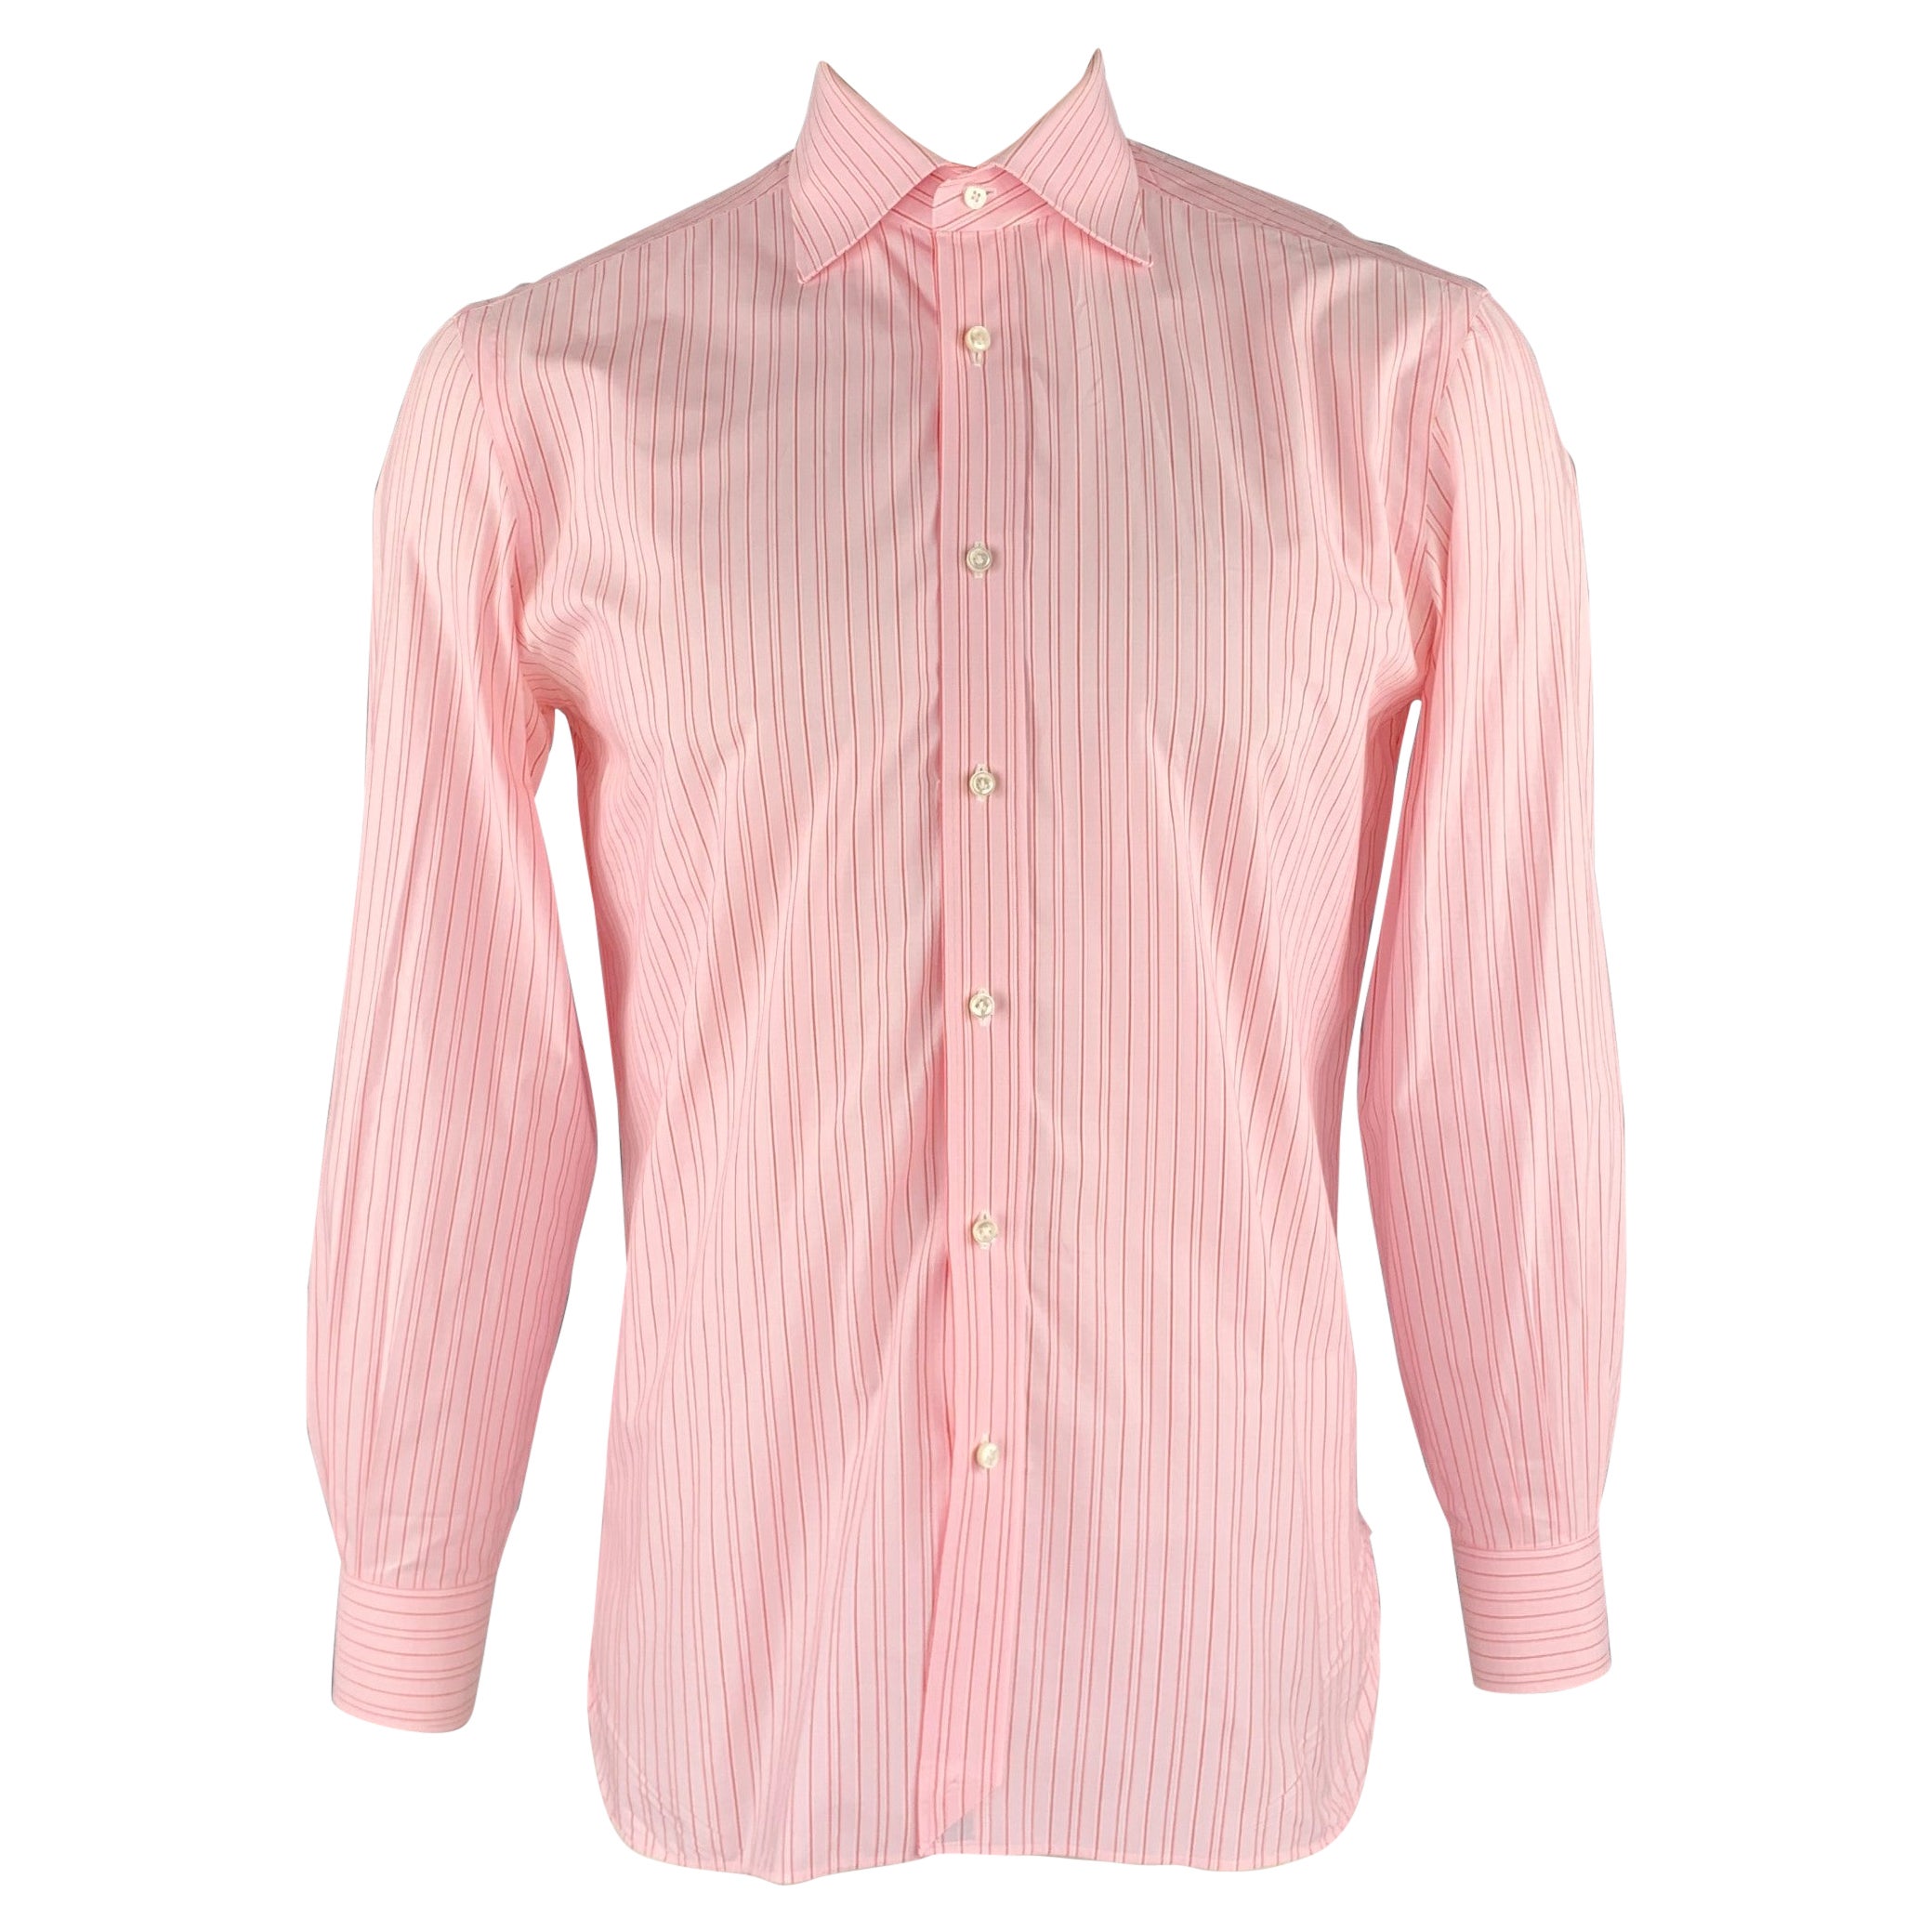  BORRELLI Size M Pink Stripe Cotton Button Up Long Sleeve Shirt